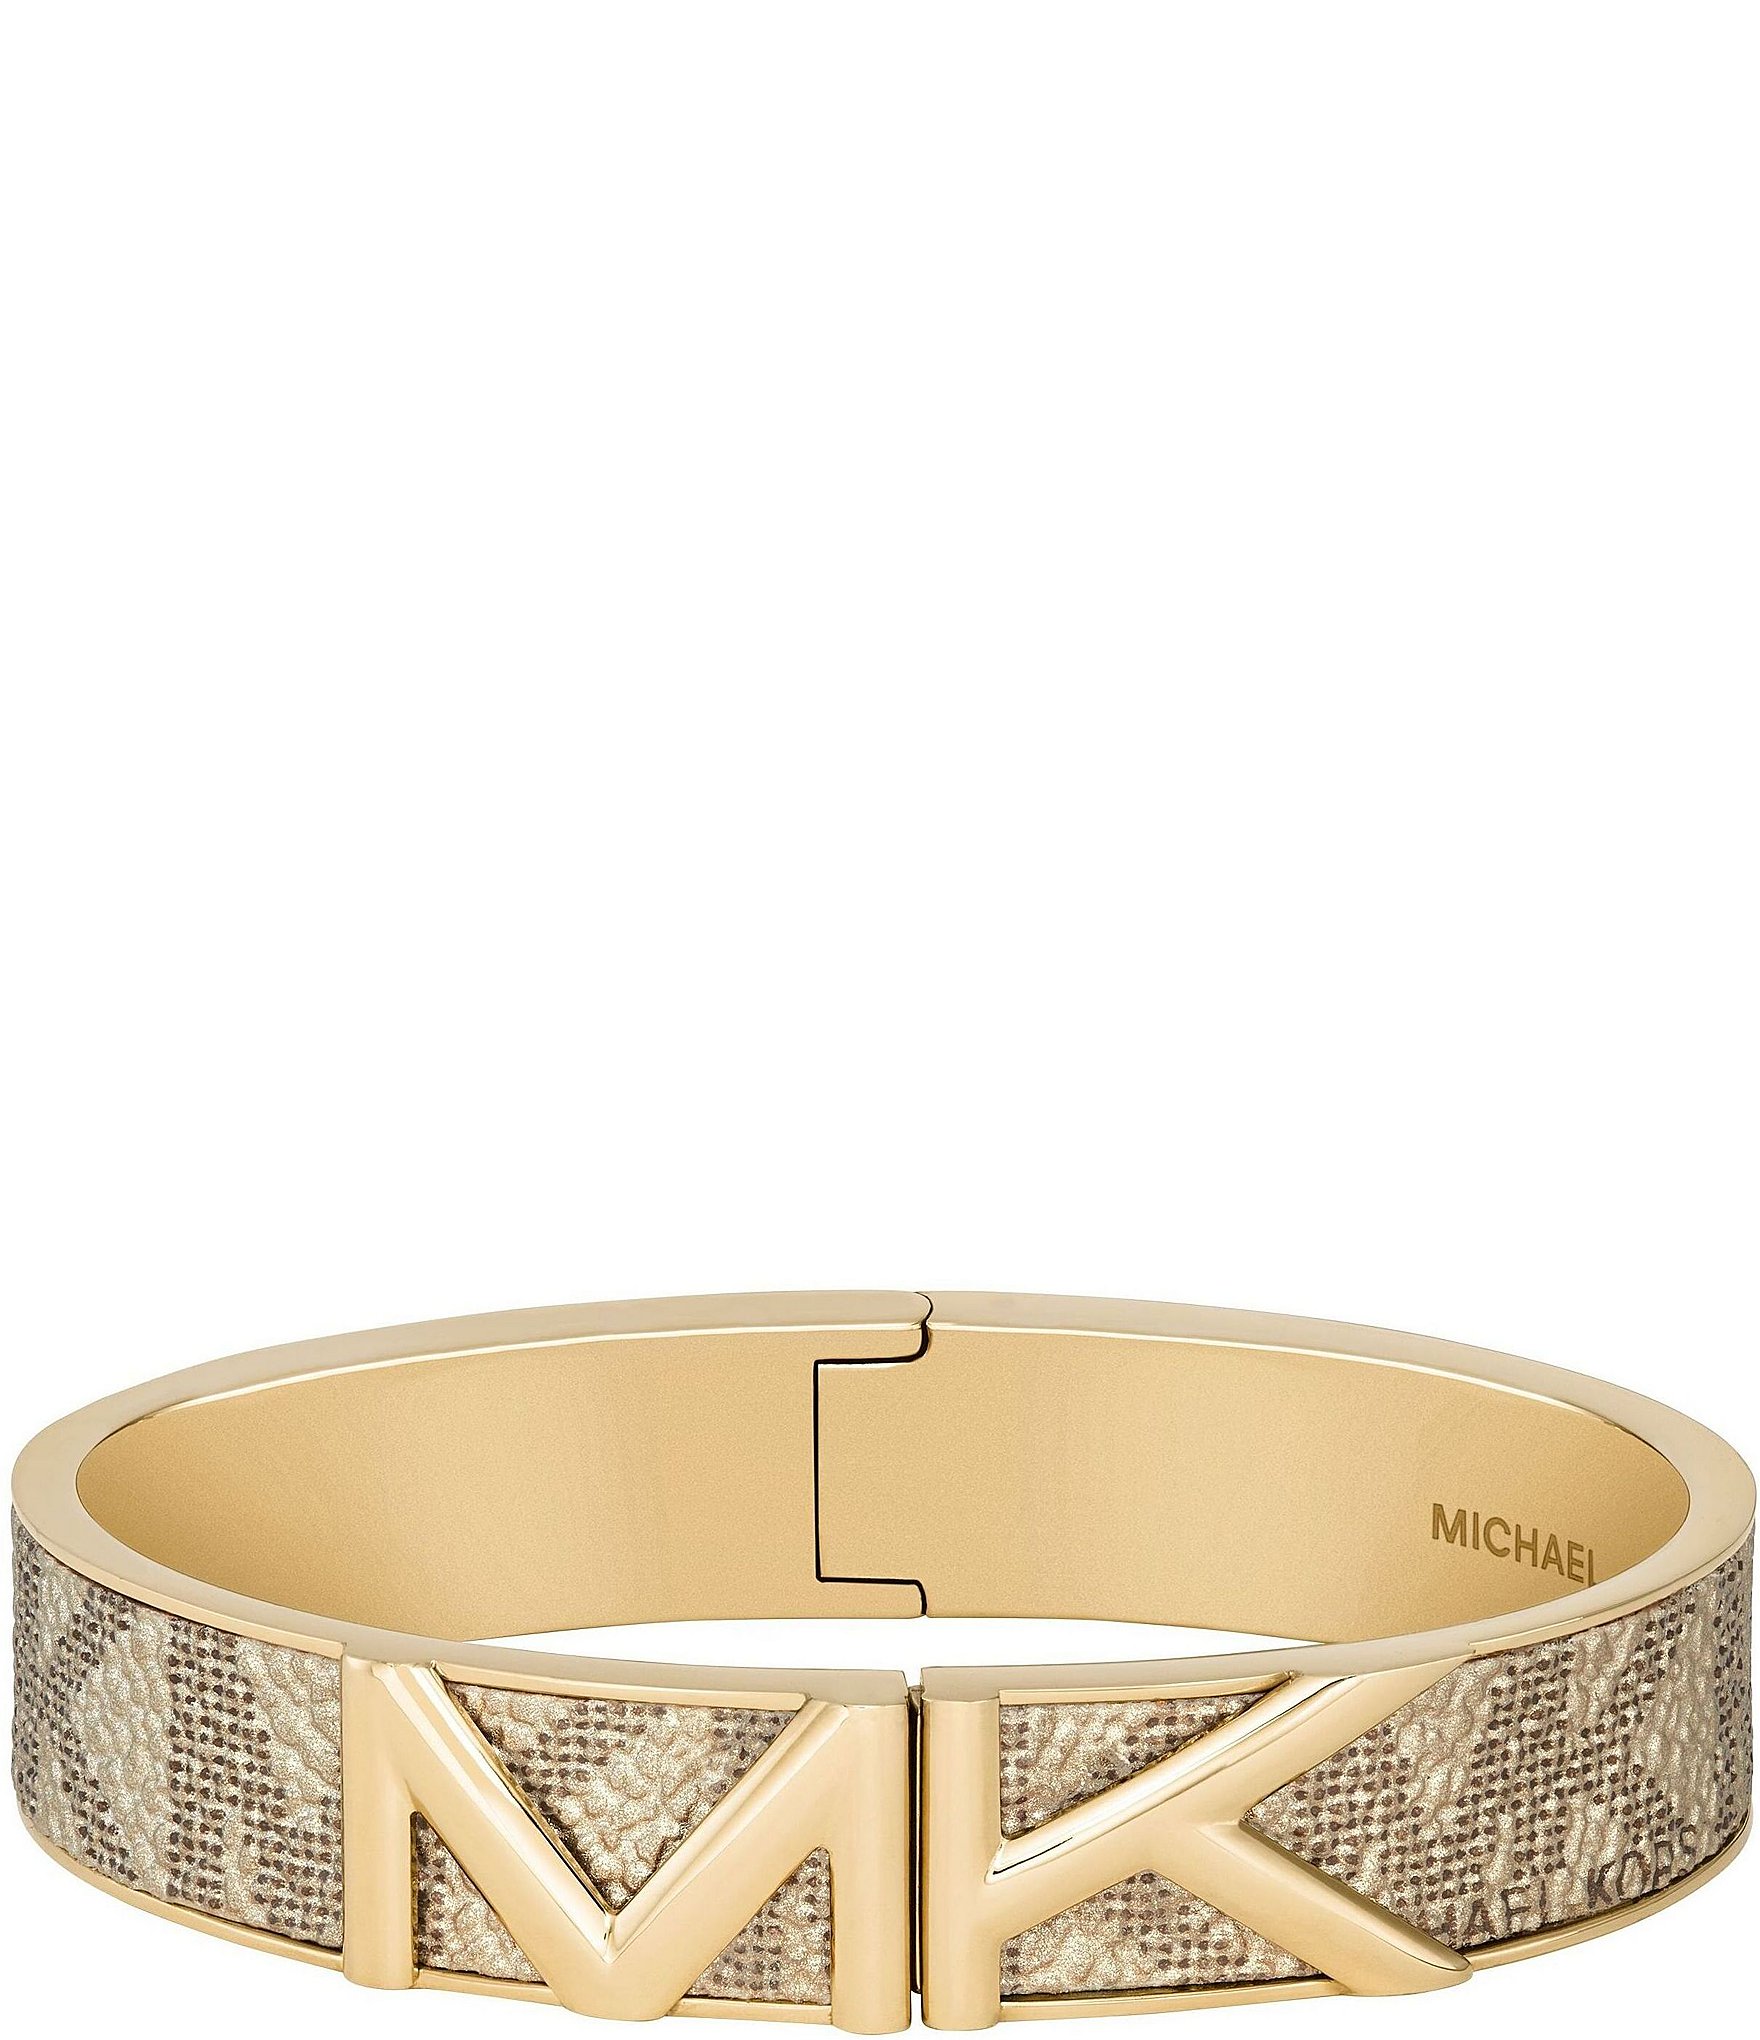 Michael Kors 14K GoldPlated Sterling Silver MK Logo Bangle Bracelet   MKC1548AN710  Watch Station